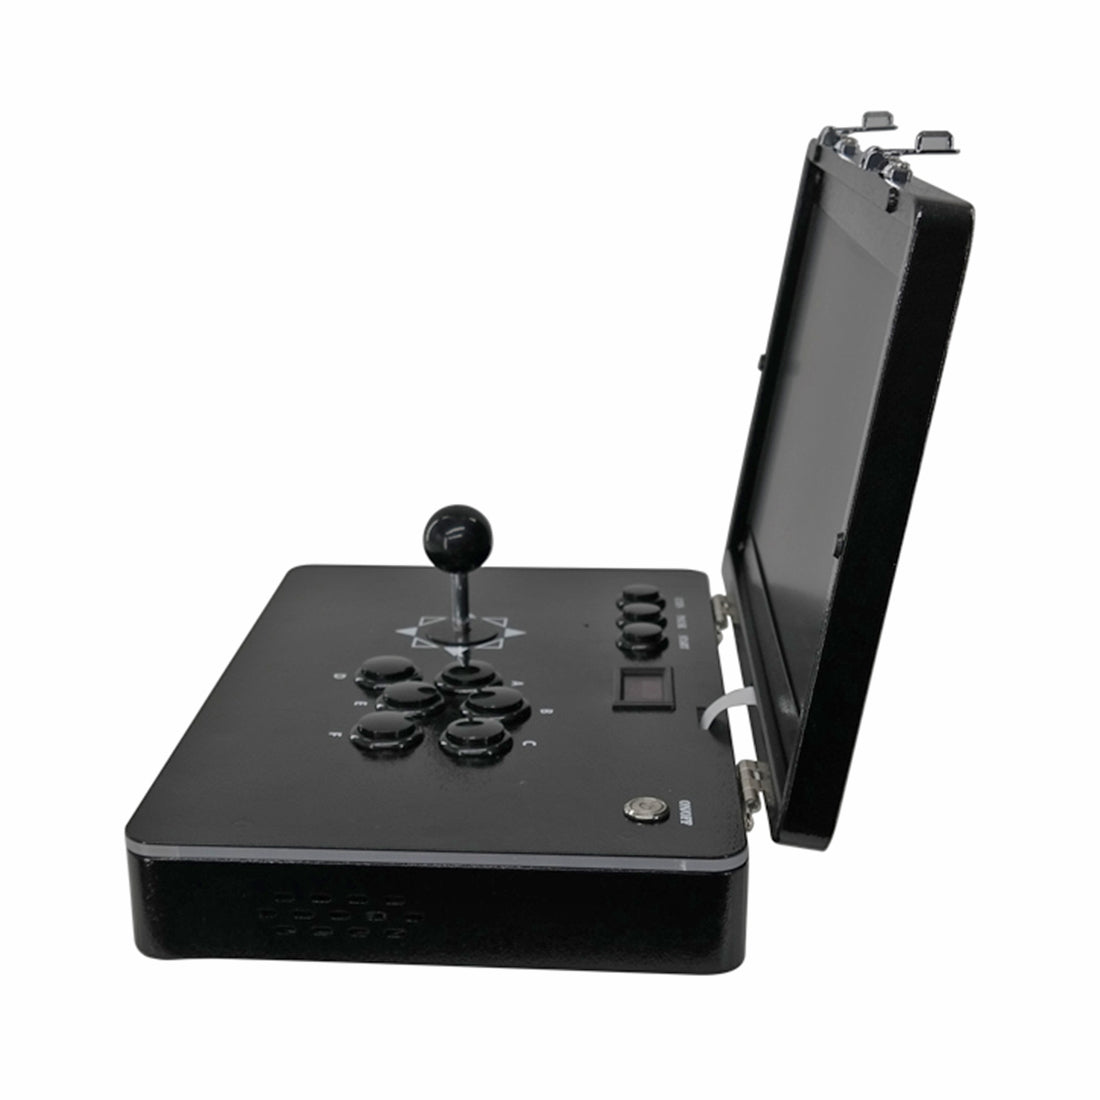 Pandora AUS-S31 14-inch Mini Folding Retro Arcade Game Device